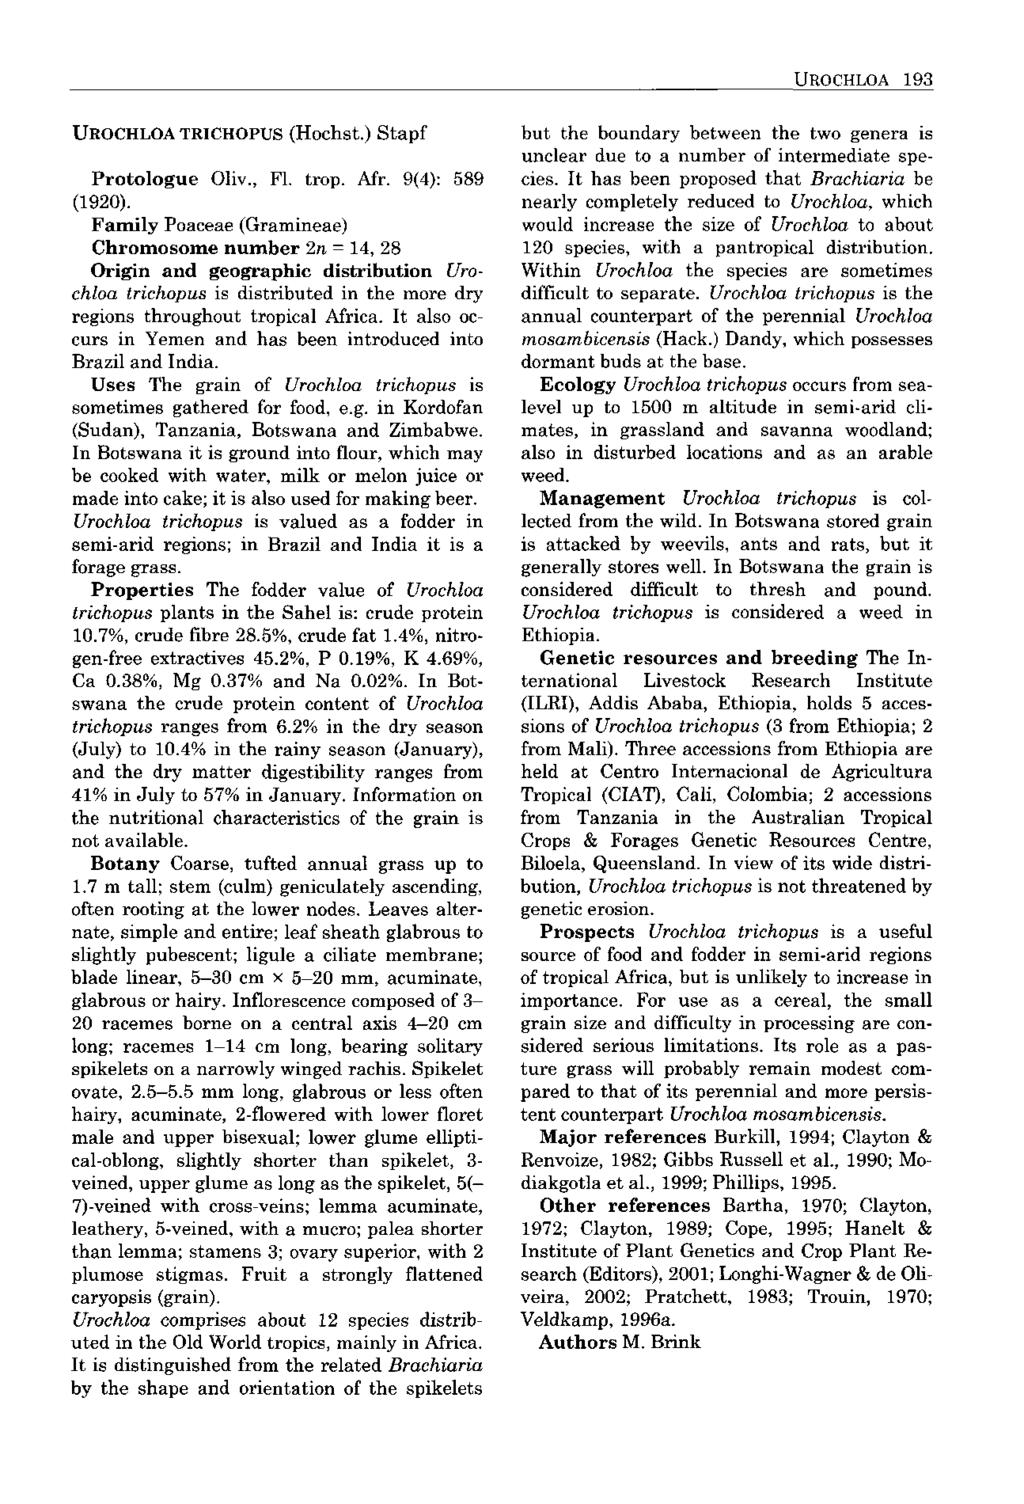 UROCHLOA 193 UEOCHLOA TRICHOPUS (Höchst.) Stapf Protologue Oliv., Fl. trop. Afr. 9(4): 589 (1920).